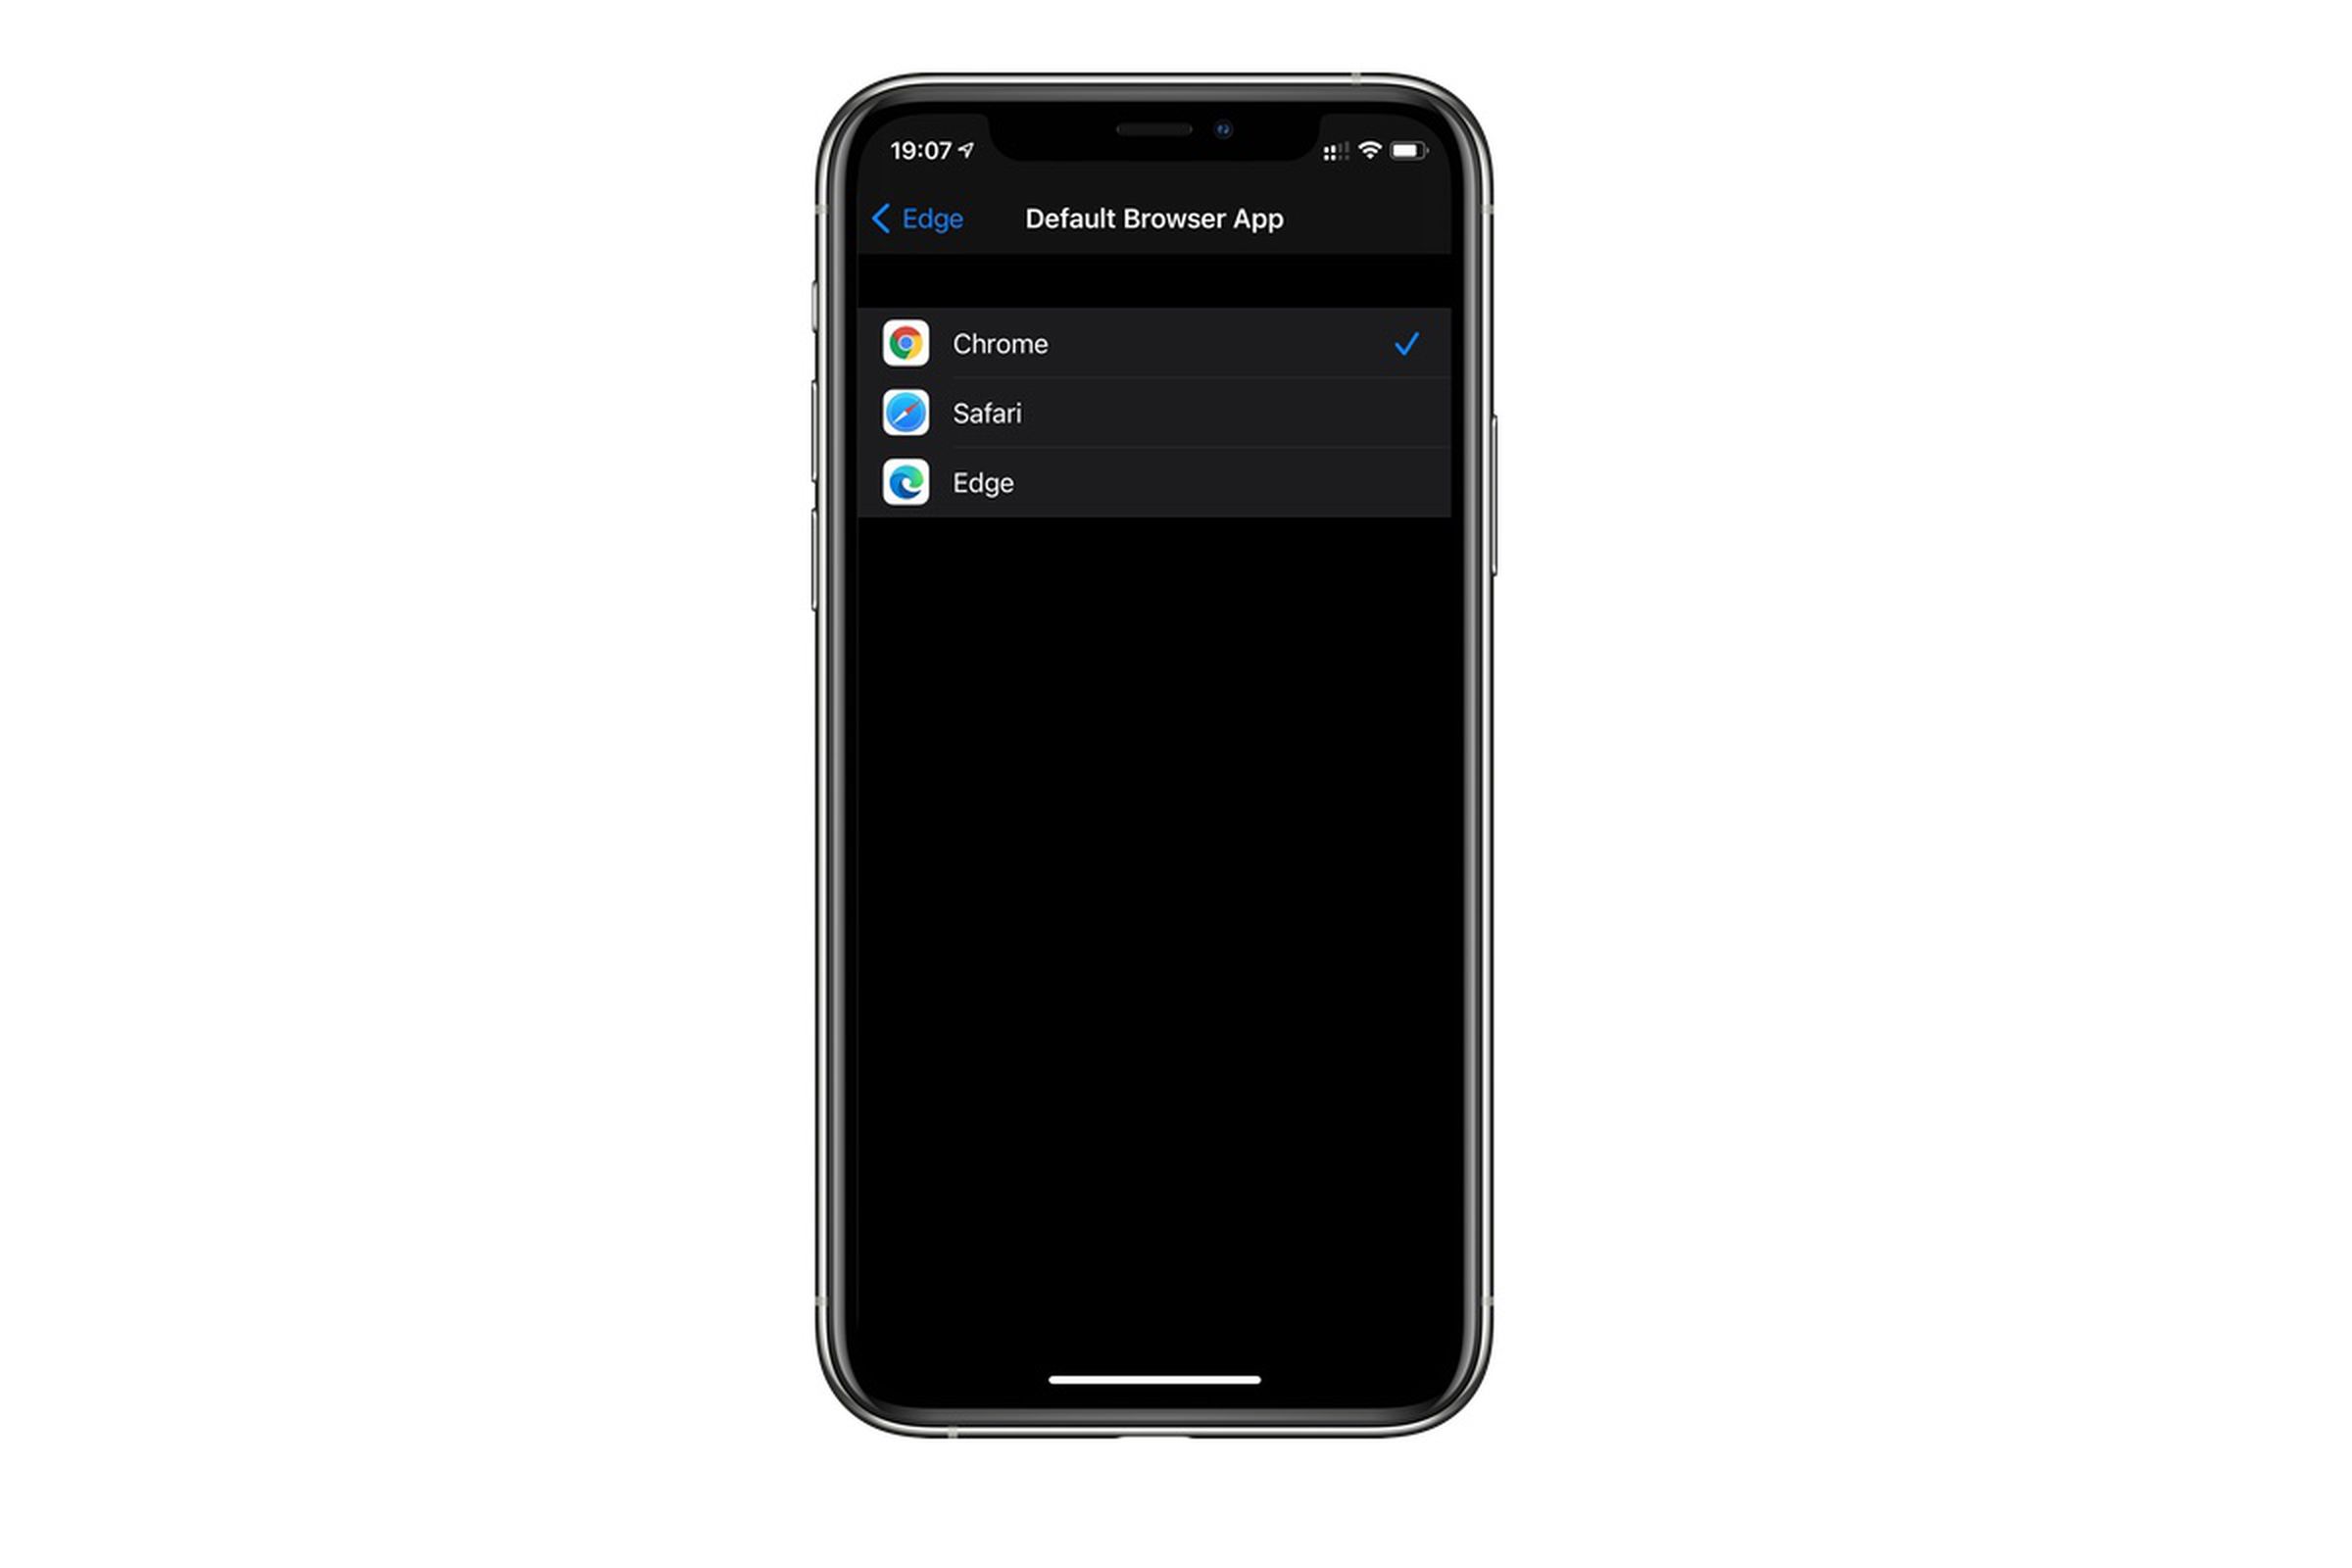 change safari as default browser iphone